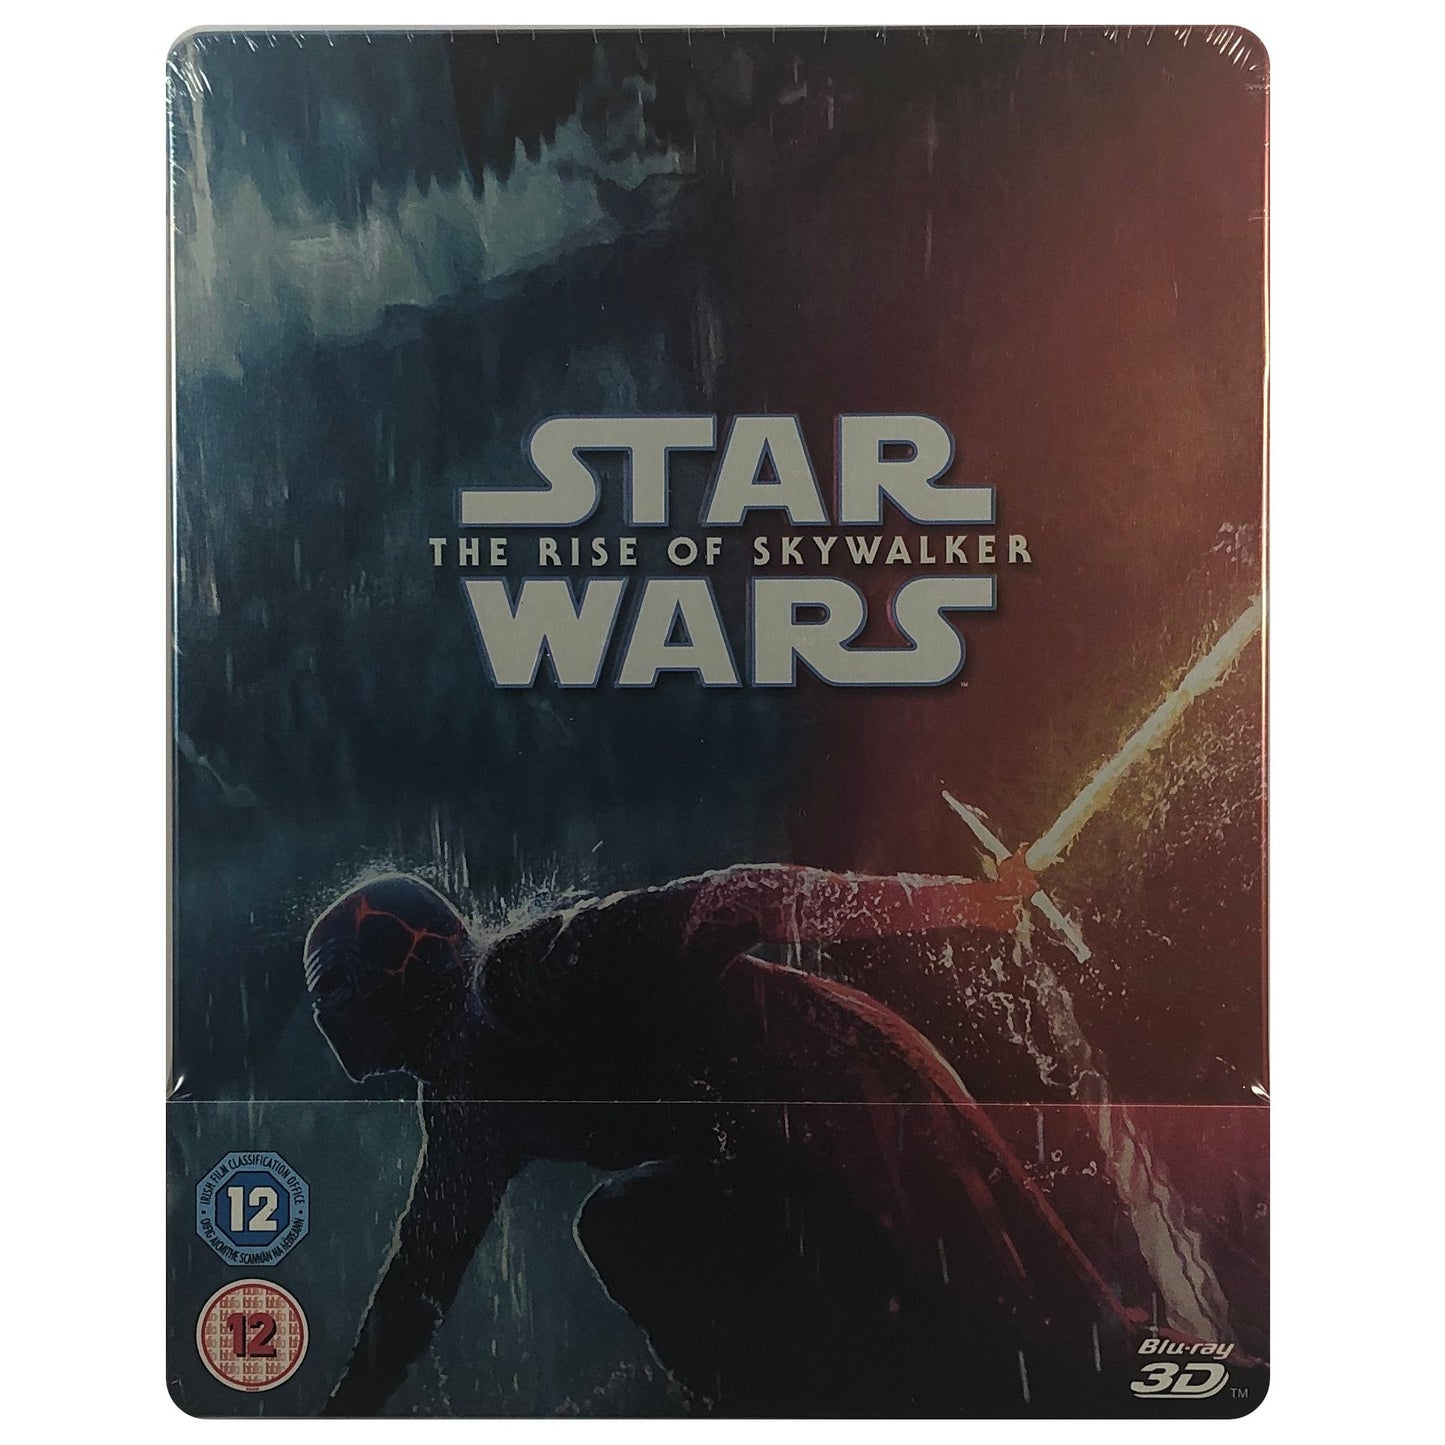 Star Wars The Rise of Skywalker Blu-Ray Steelbook